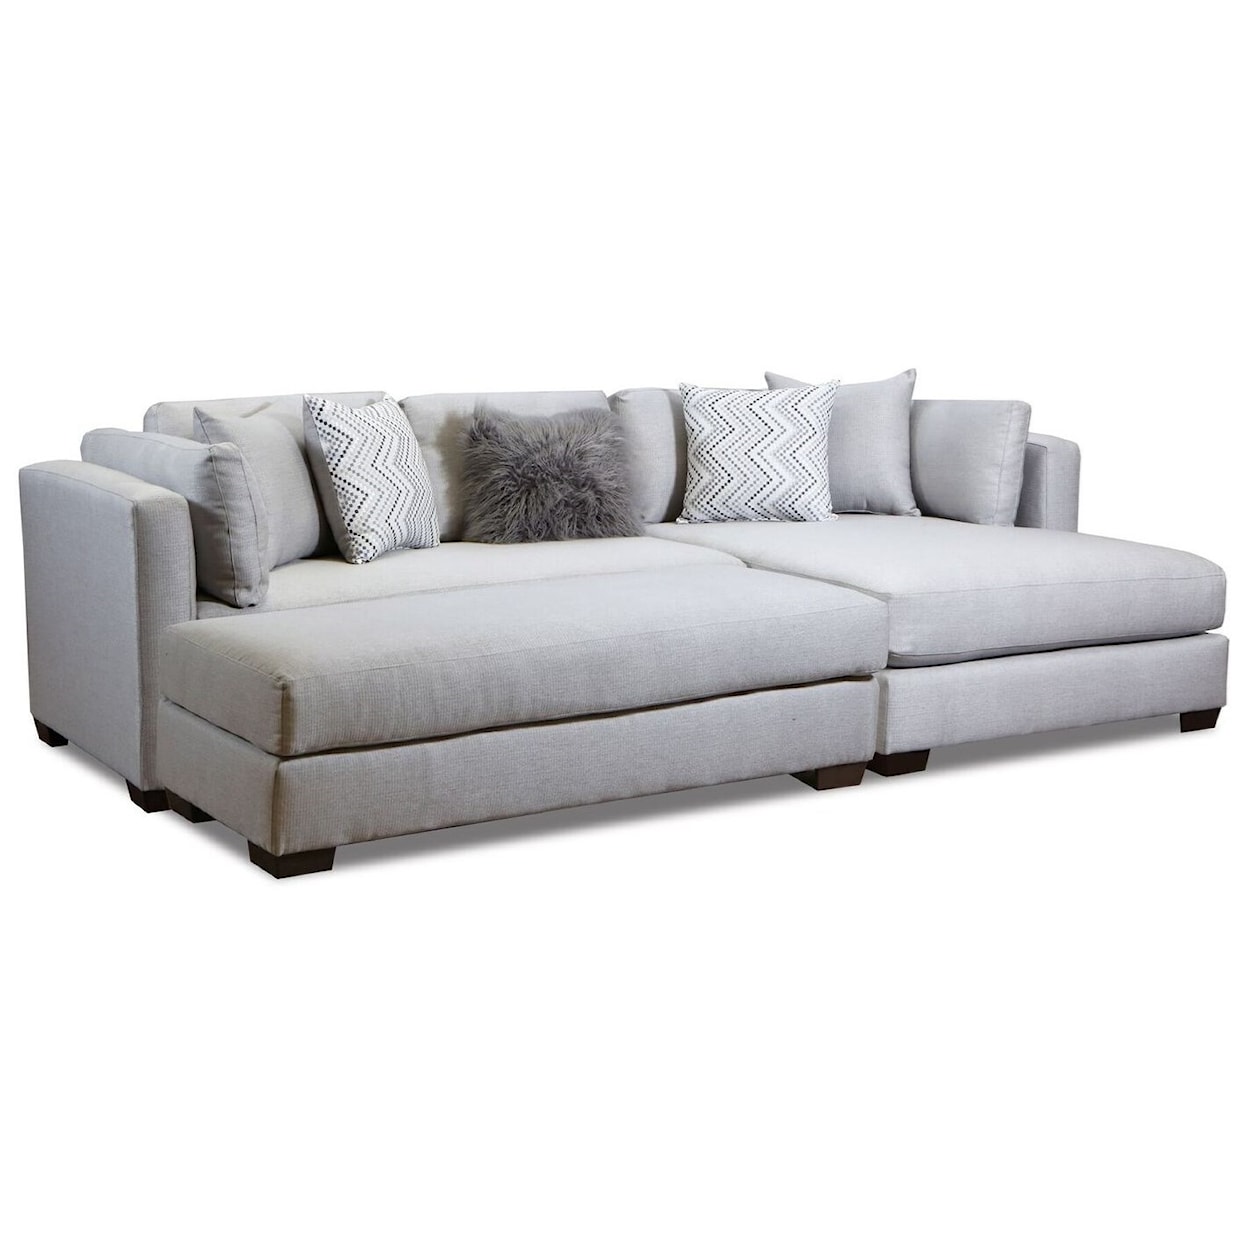 Peak Living 5500 Chaise-Inspired Sectional Sofa